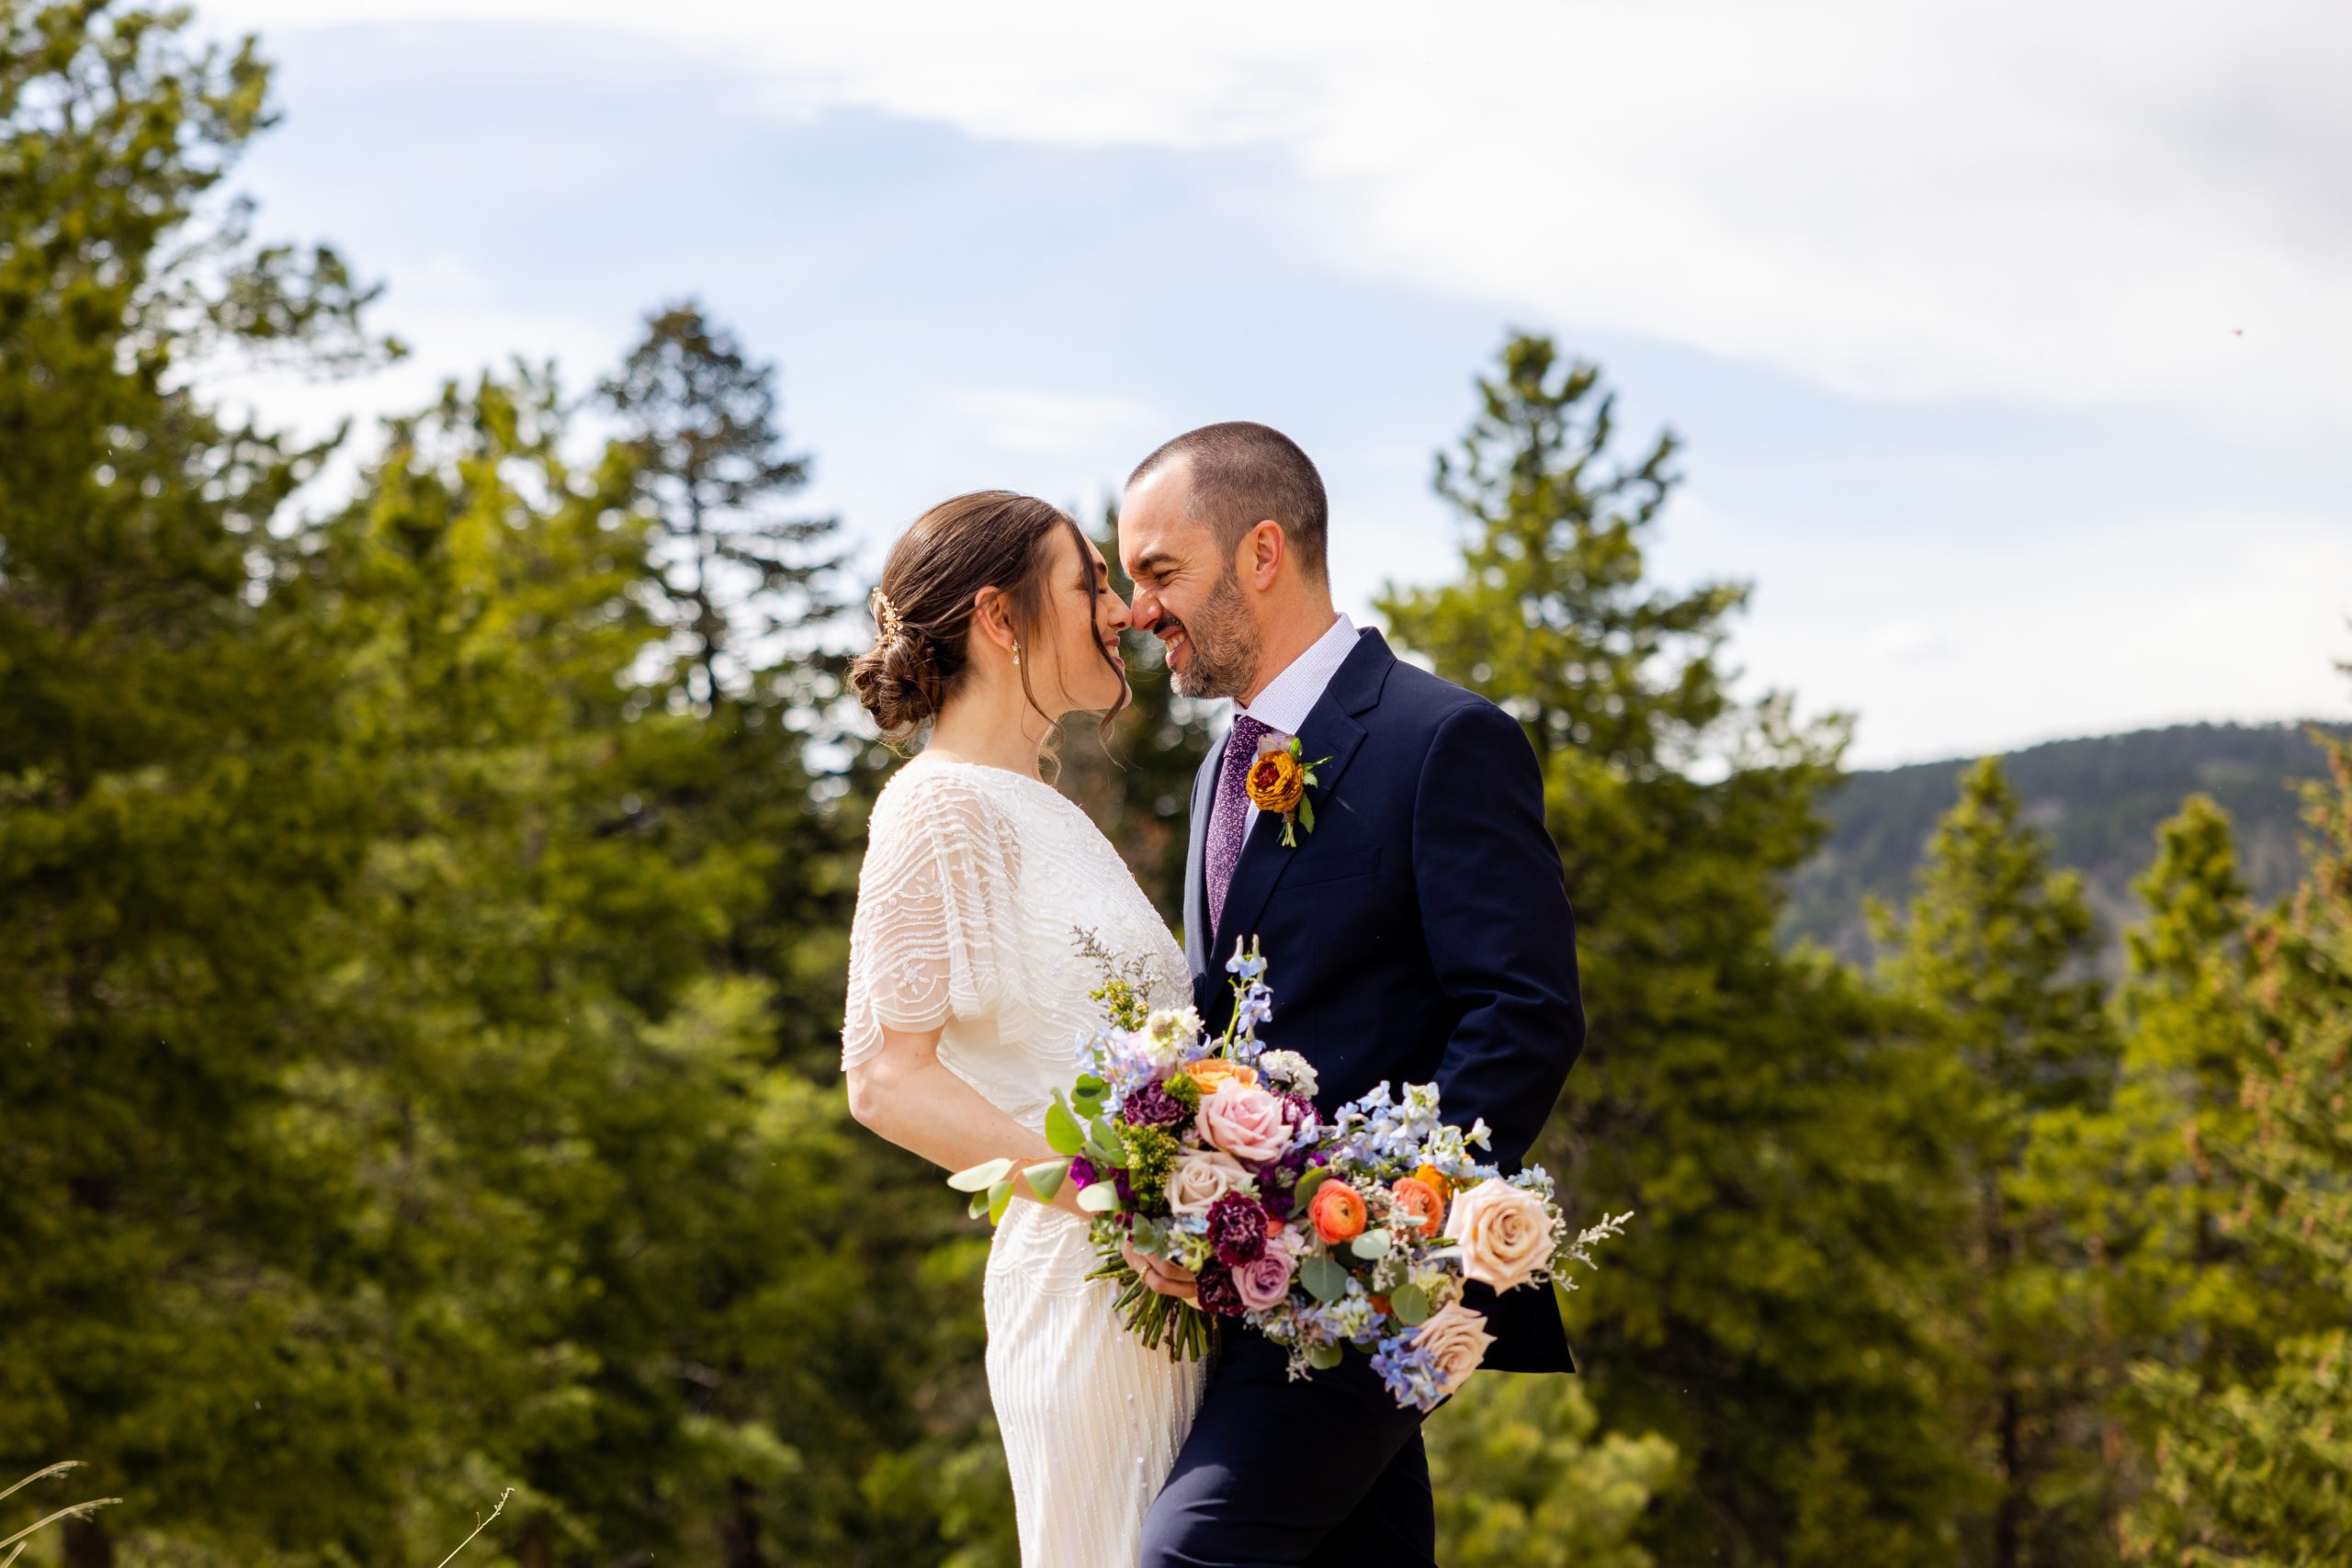 Gold Hill Inn Boulder Colorado Bride and Groom wedding photos, BHLDN, A Florae, Colorful wedding bouquet